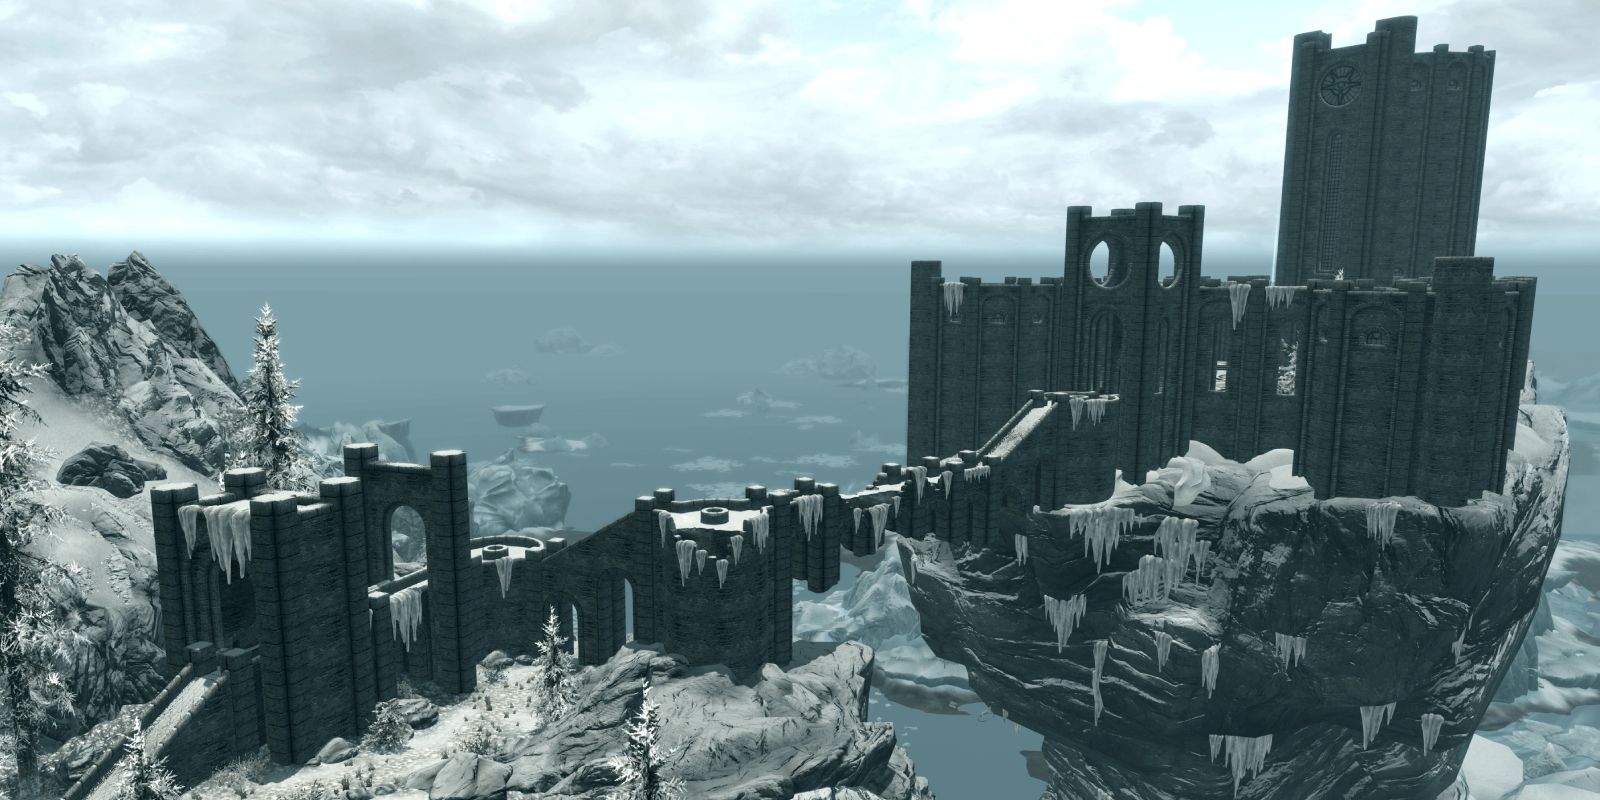 Skyrim Challenge Builds To Make The Game Harder Questline Thieves Guild Dark Brotherhood Companions College Winterhold